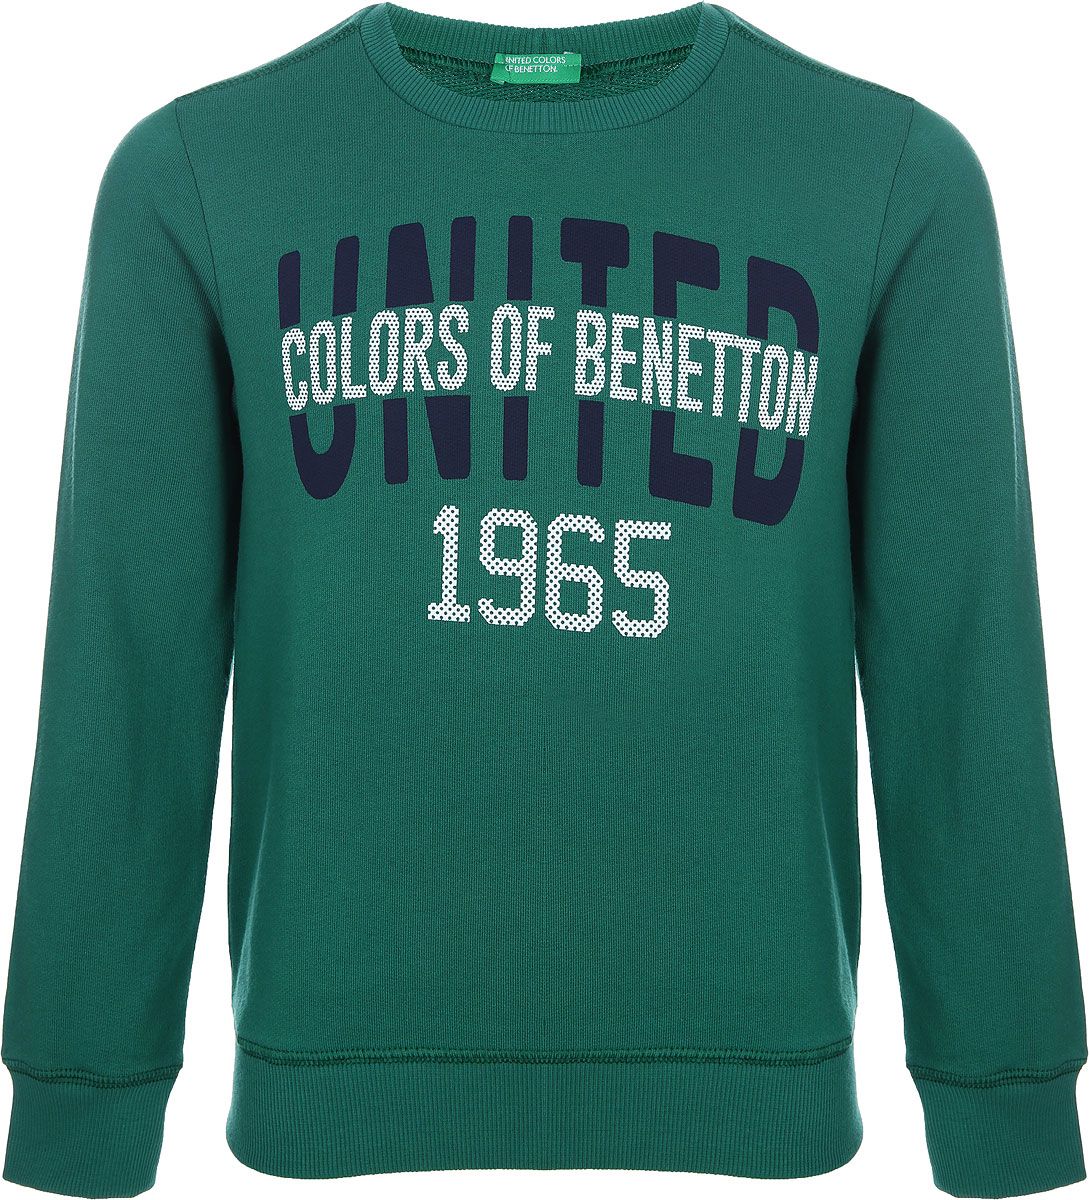    United Colors of Benetton, : . 3J68C13ZU_256.  L (140)